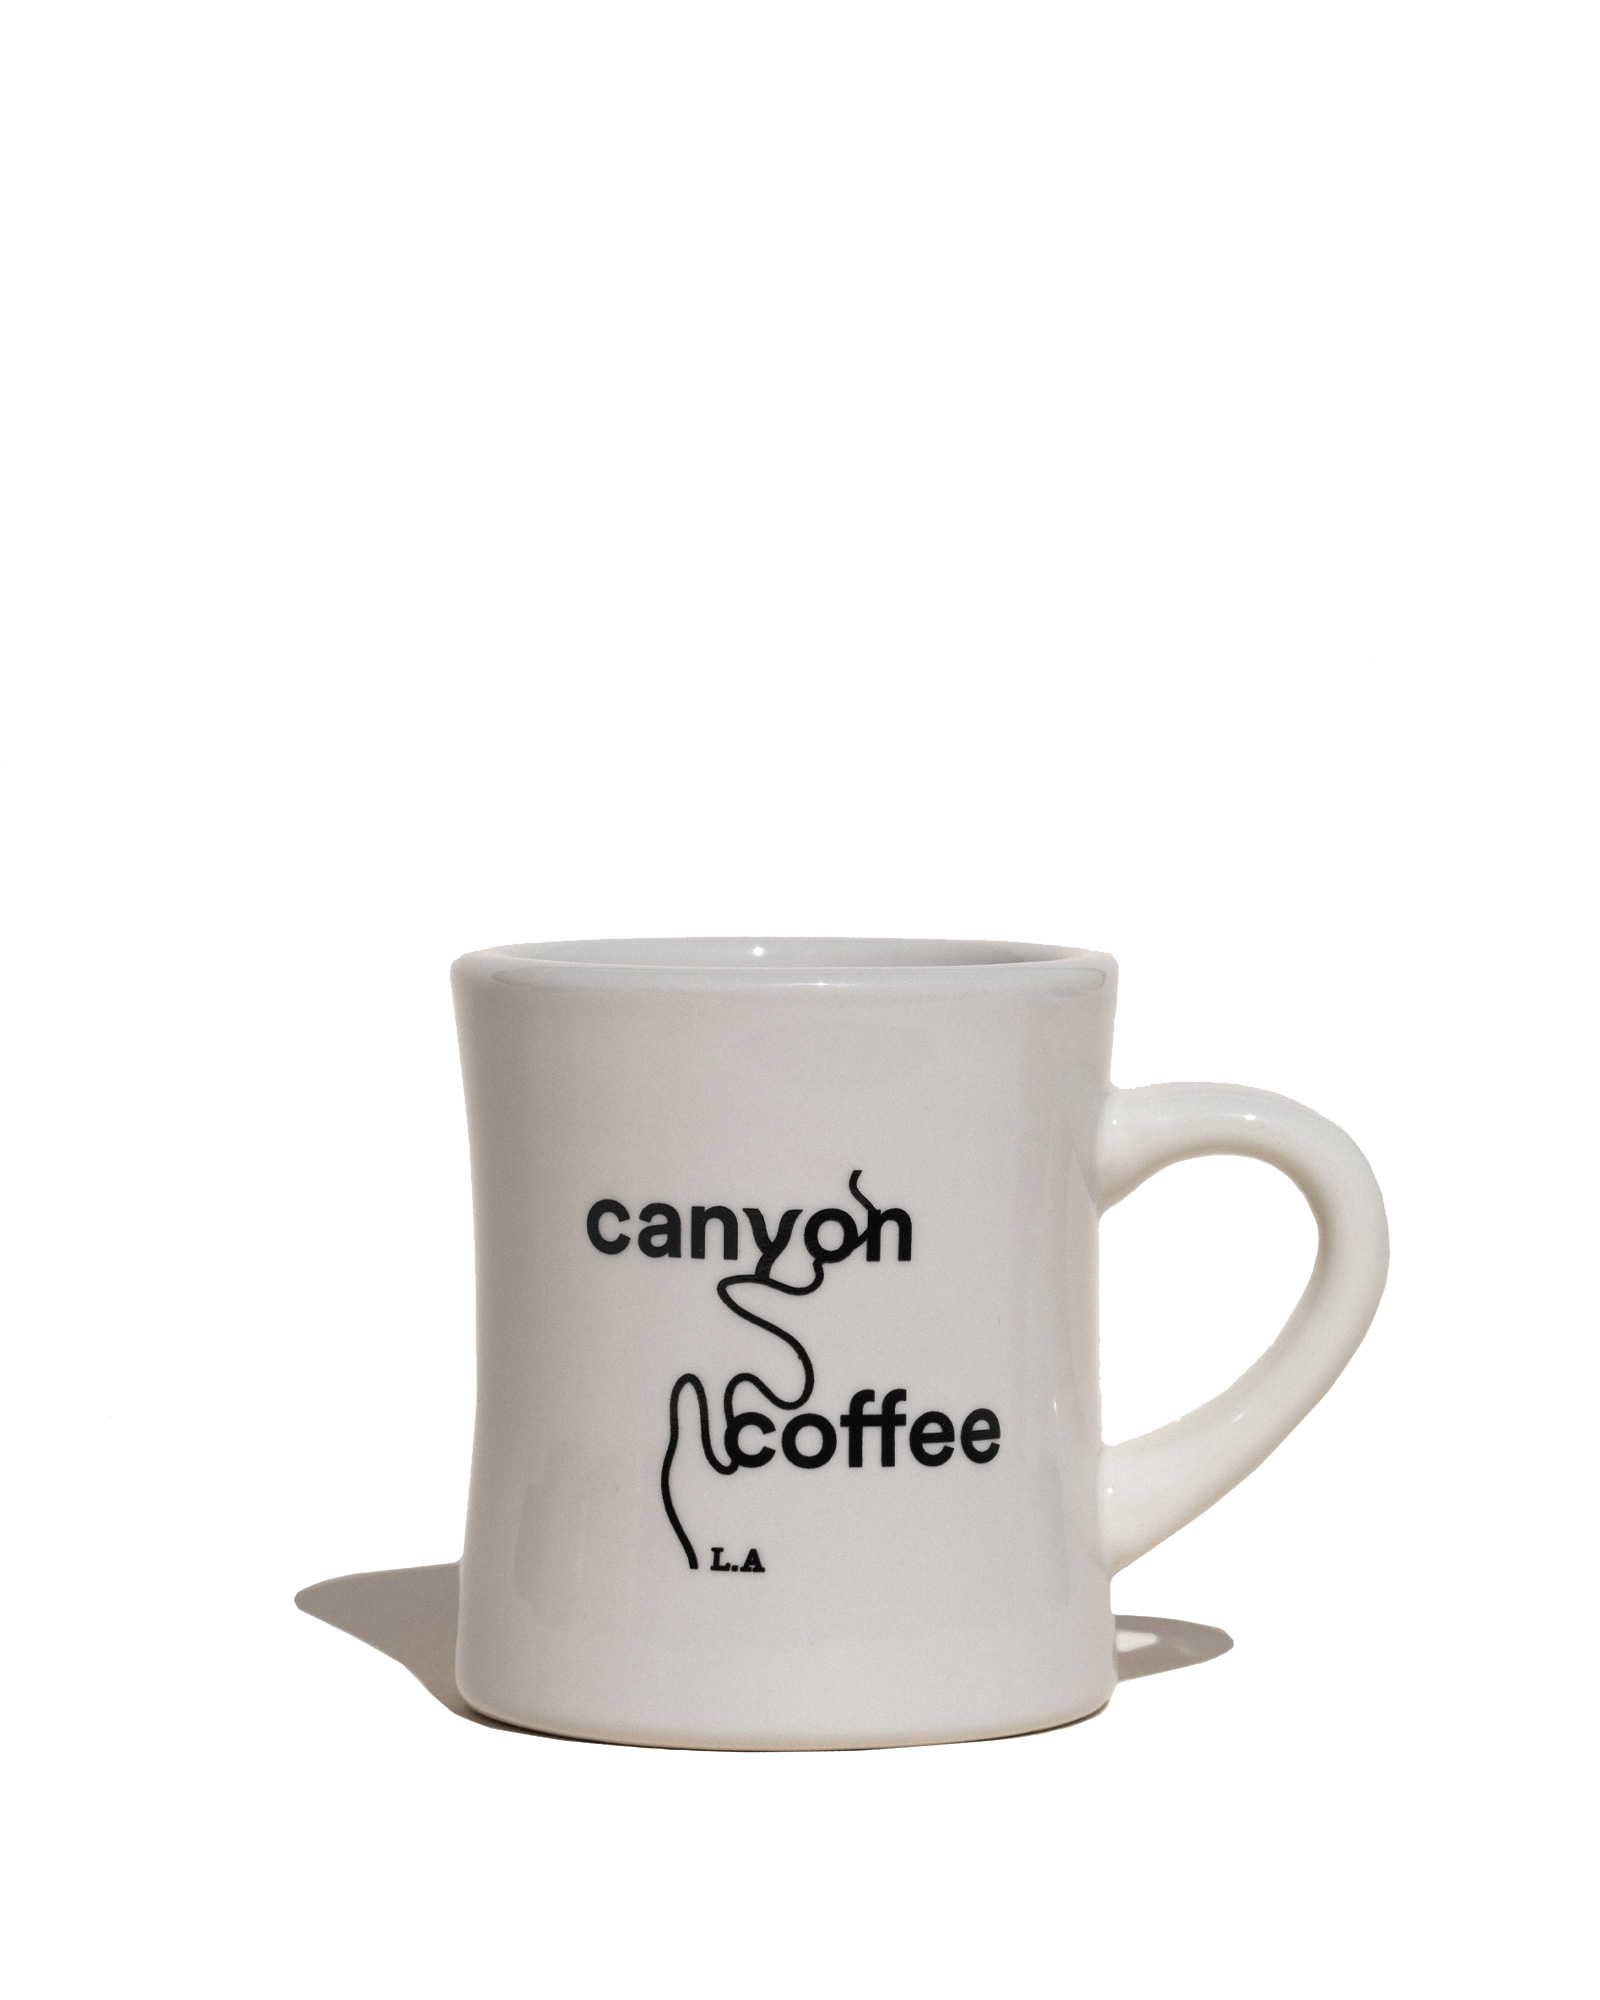 Canyon Diner Mug